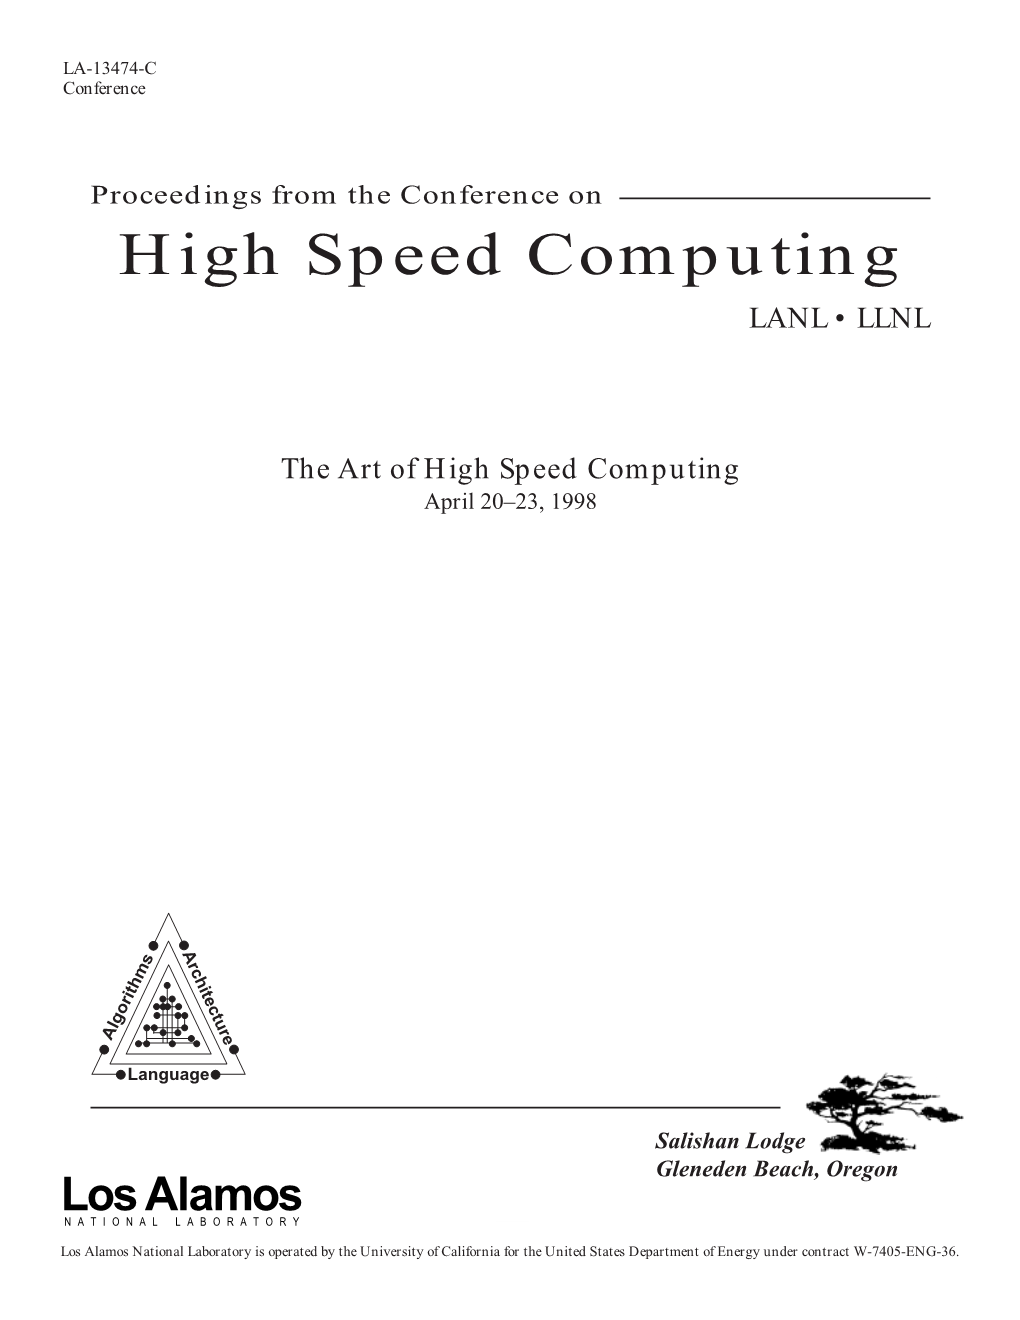 High Speed Computing LANL • LLNL